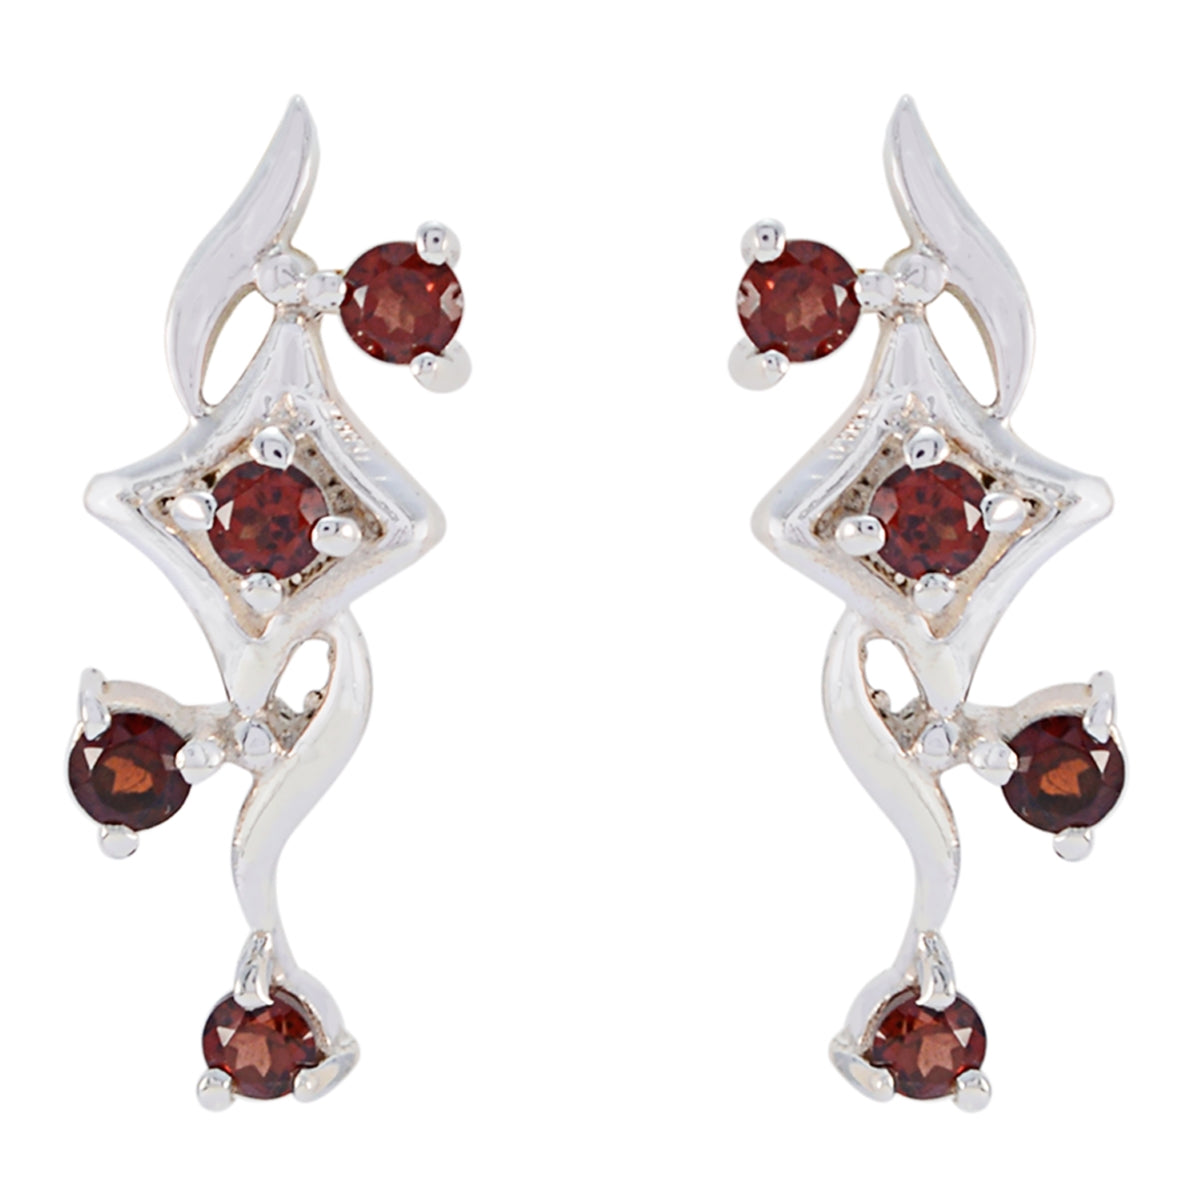 Riyo Real Gemstones round Faceted Red Garnet Silver Earrings engagement gift